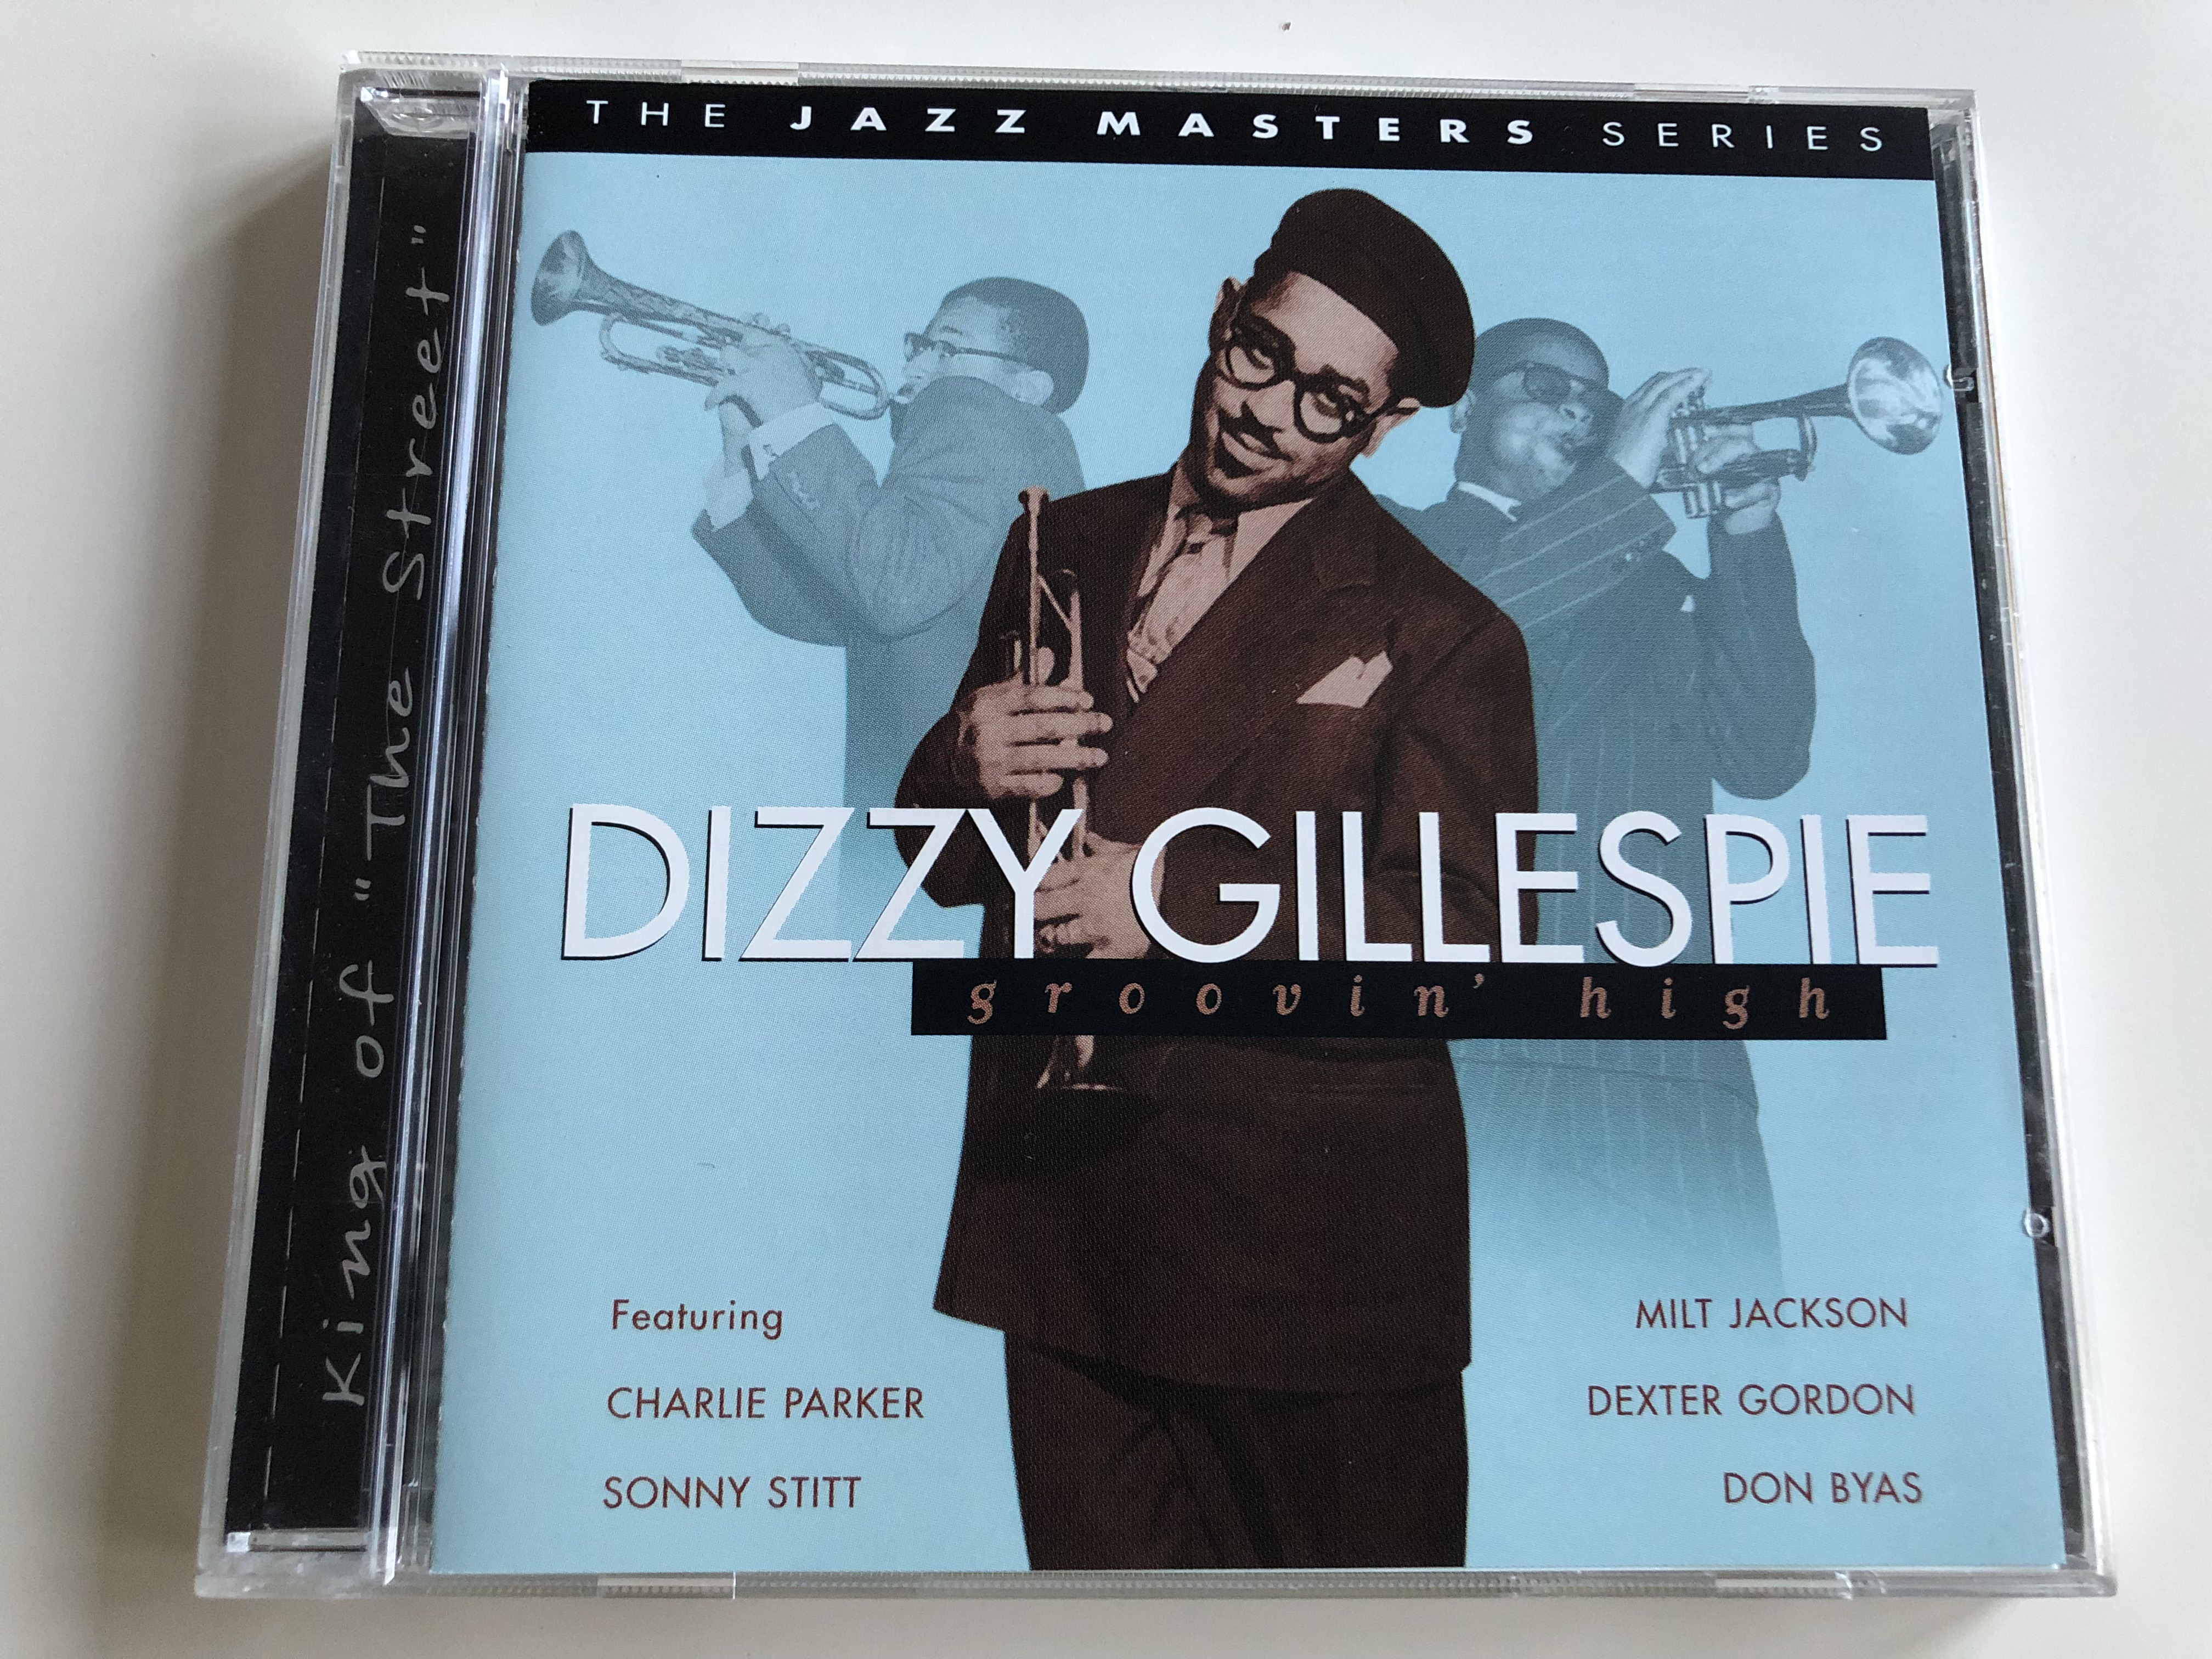 dizzy-gillespie-groovin-high-the-jazz-masters-series-featuring-charlie-parker-sonny-stitt-milt-jackson-dexter-gordon-don-byas-king-of-the-street-audio-cd-1999-platcd-514-1-.jpg